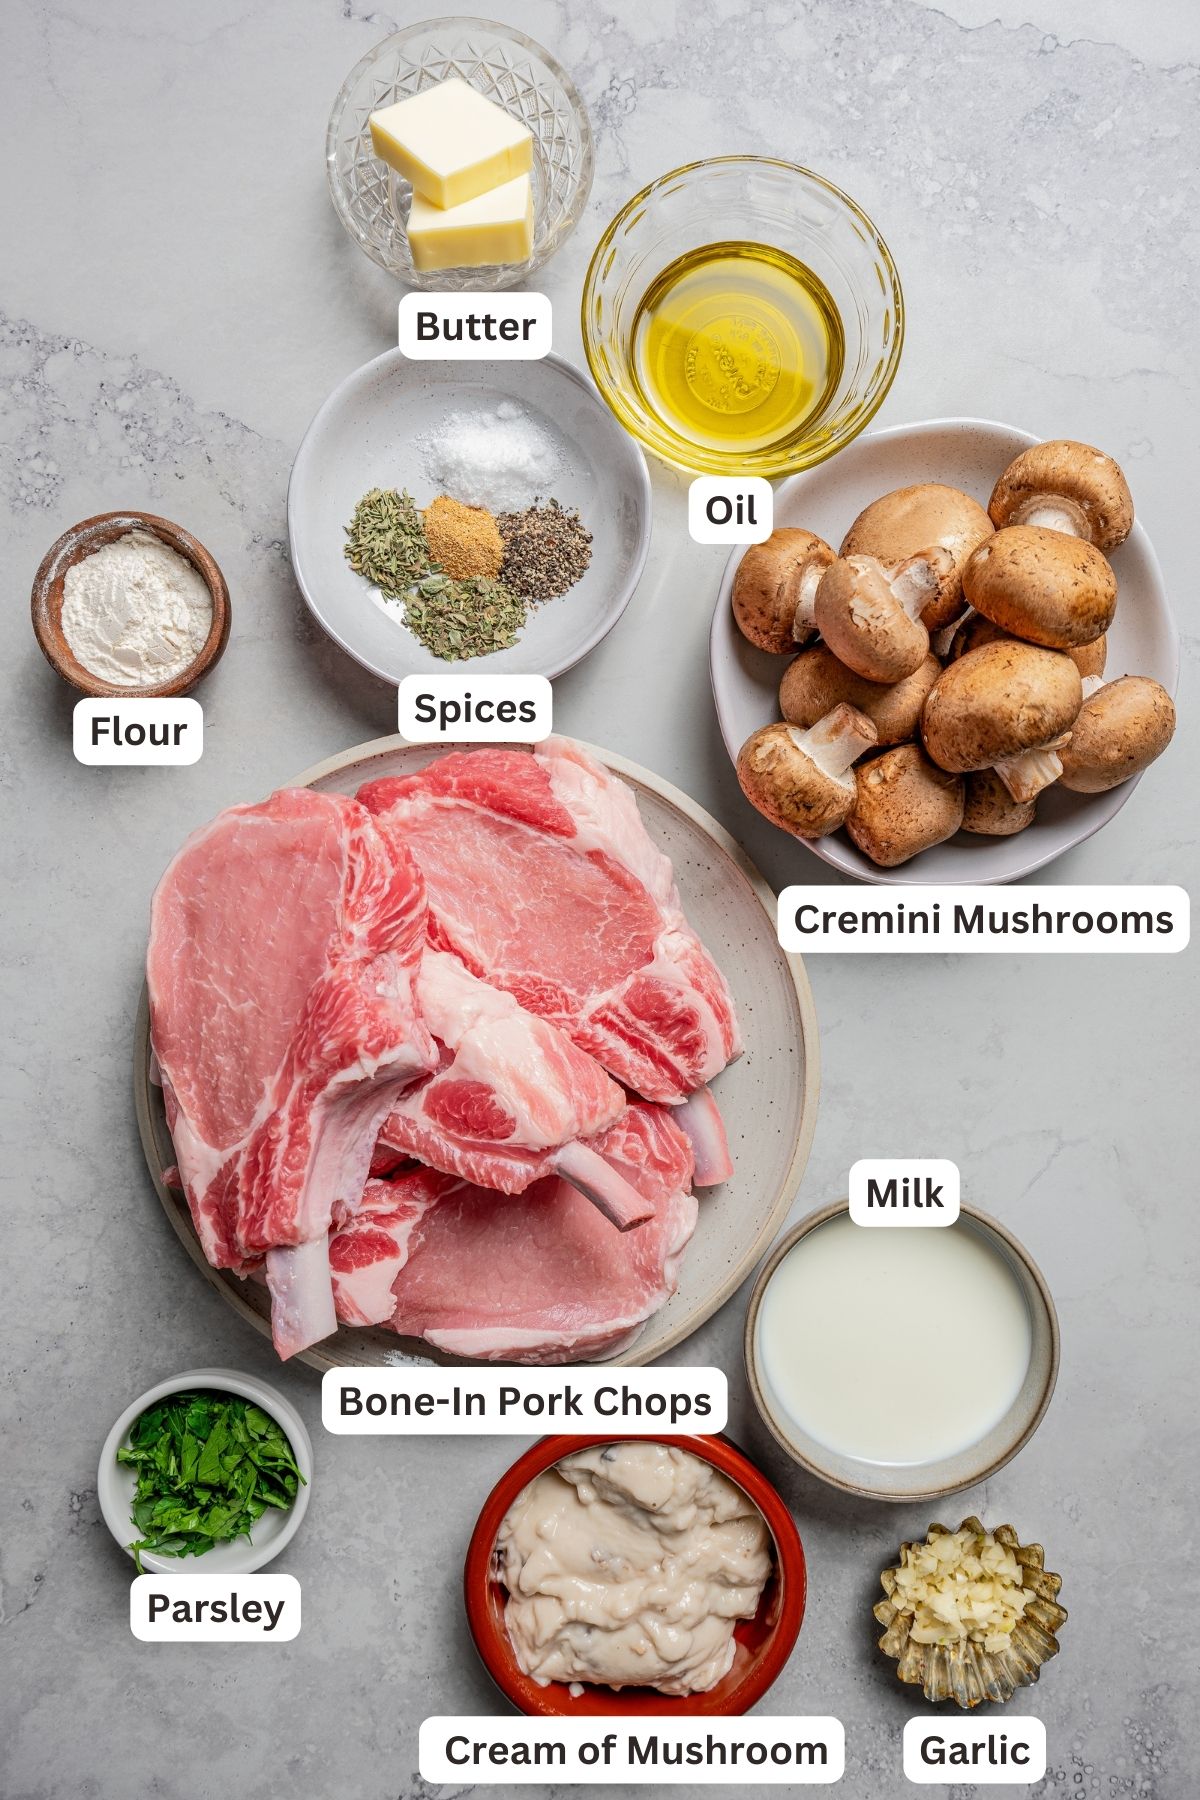 Labeled ingredients for cream of mushroom pork chops.